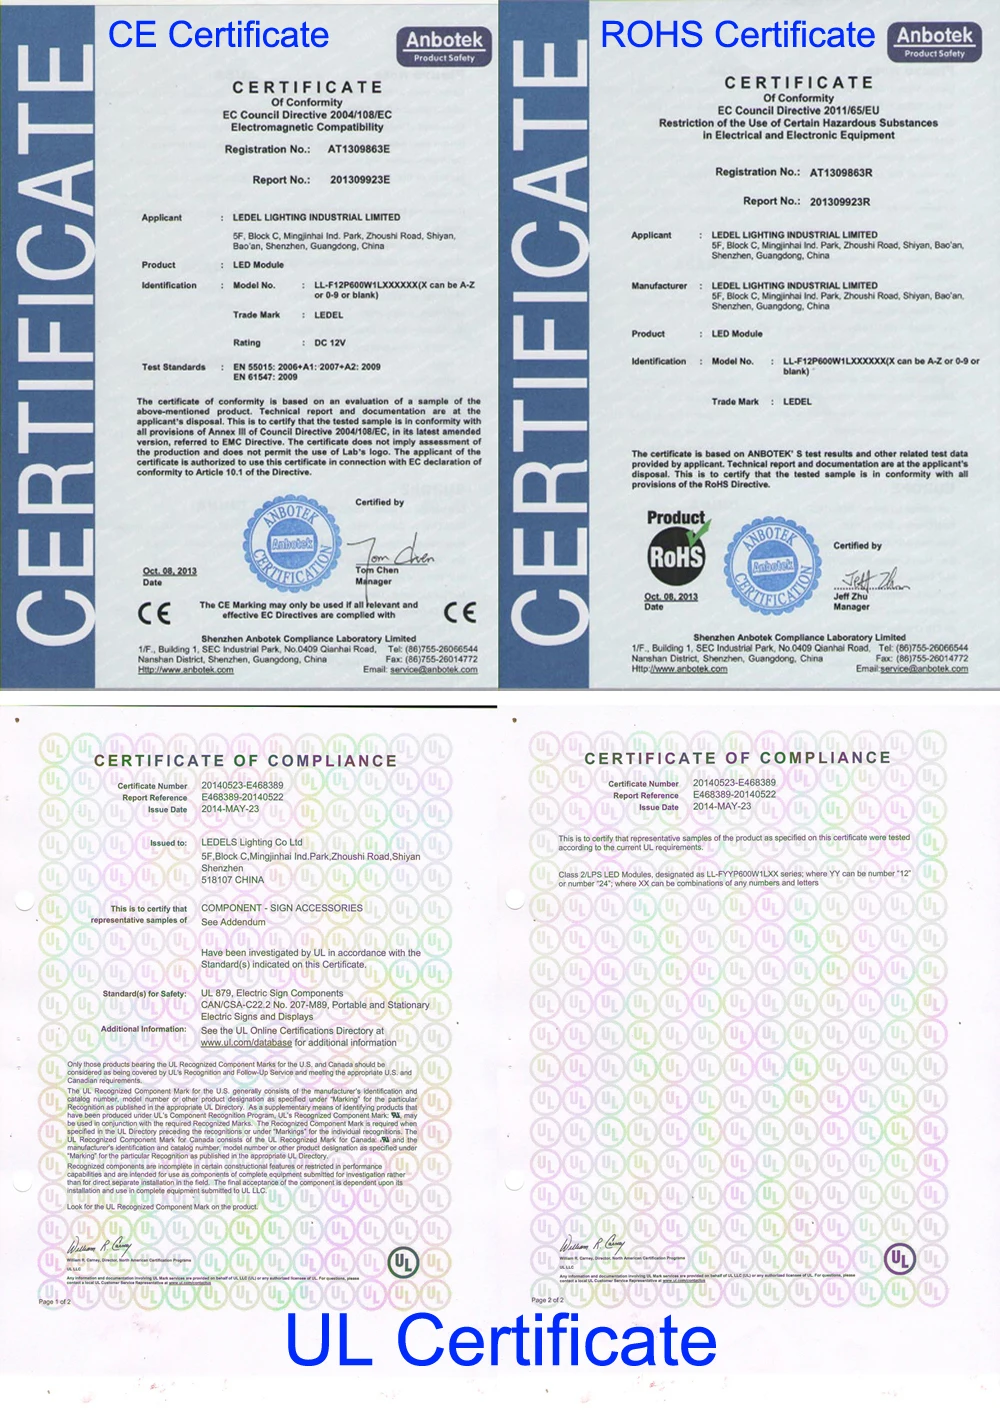 Product certificate.jpg